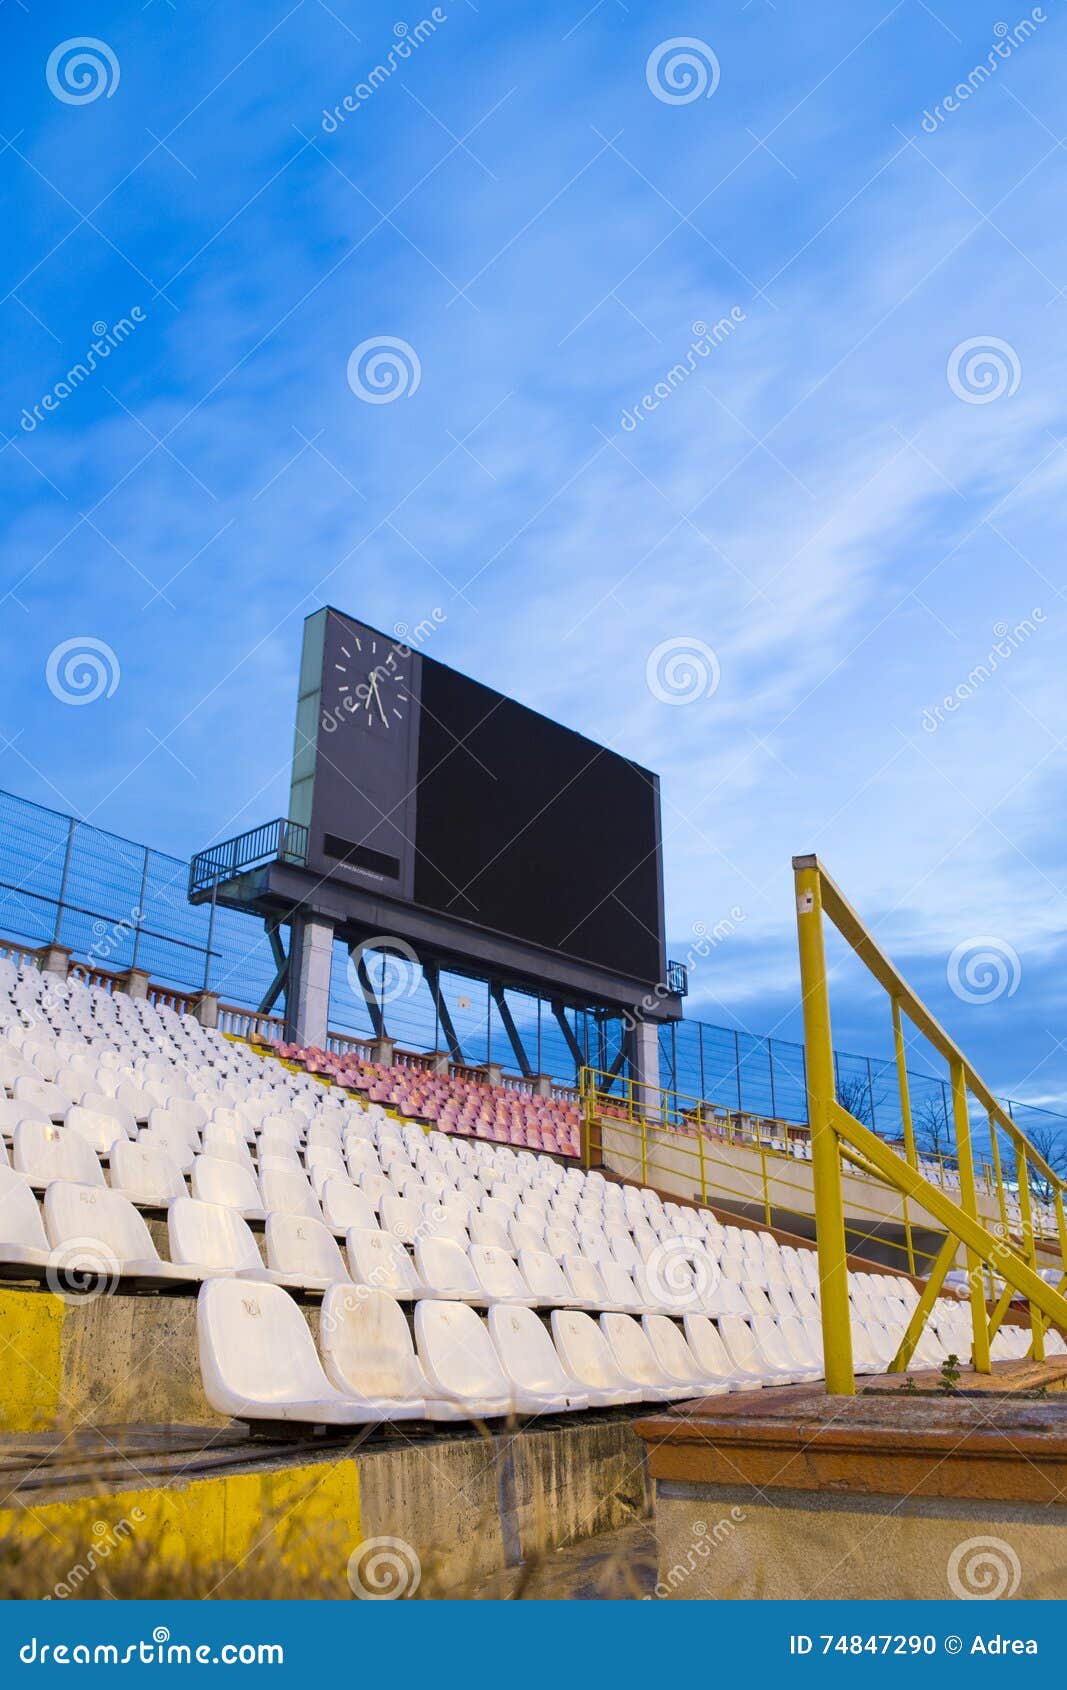 the score board from dinamo bucuresti stadium